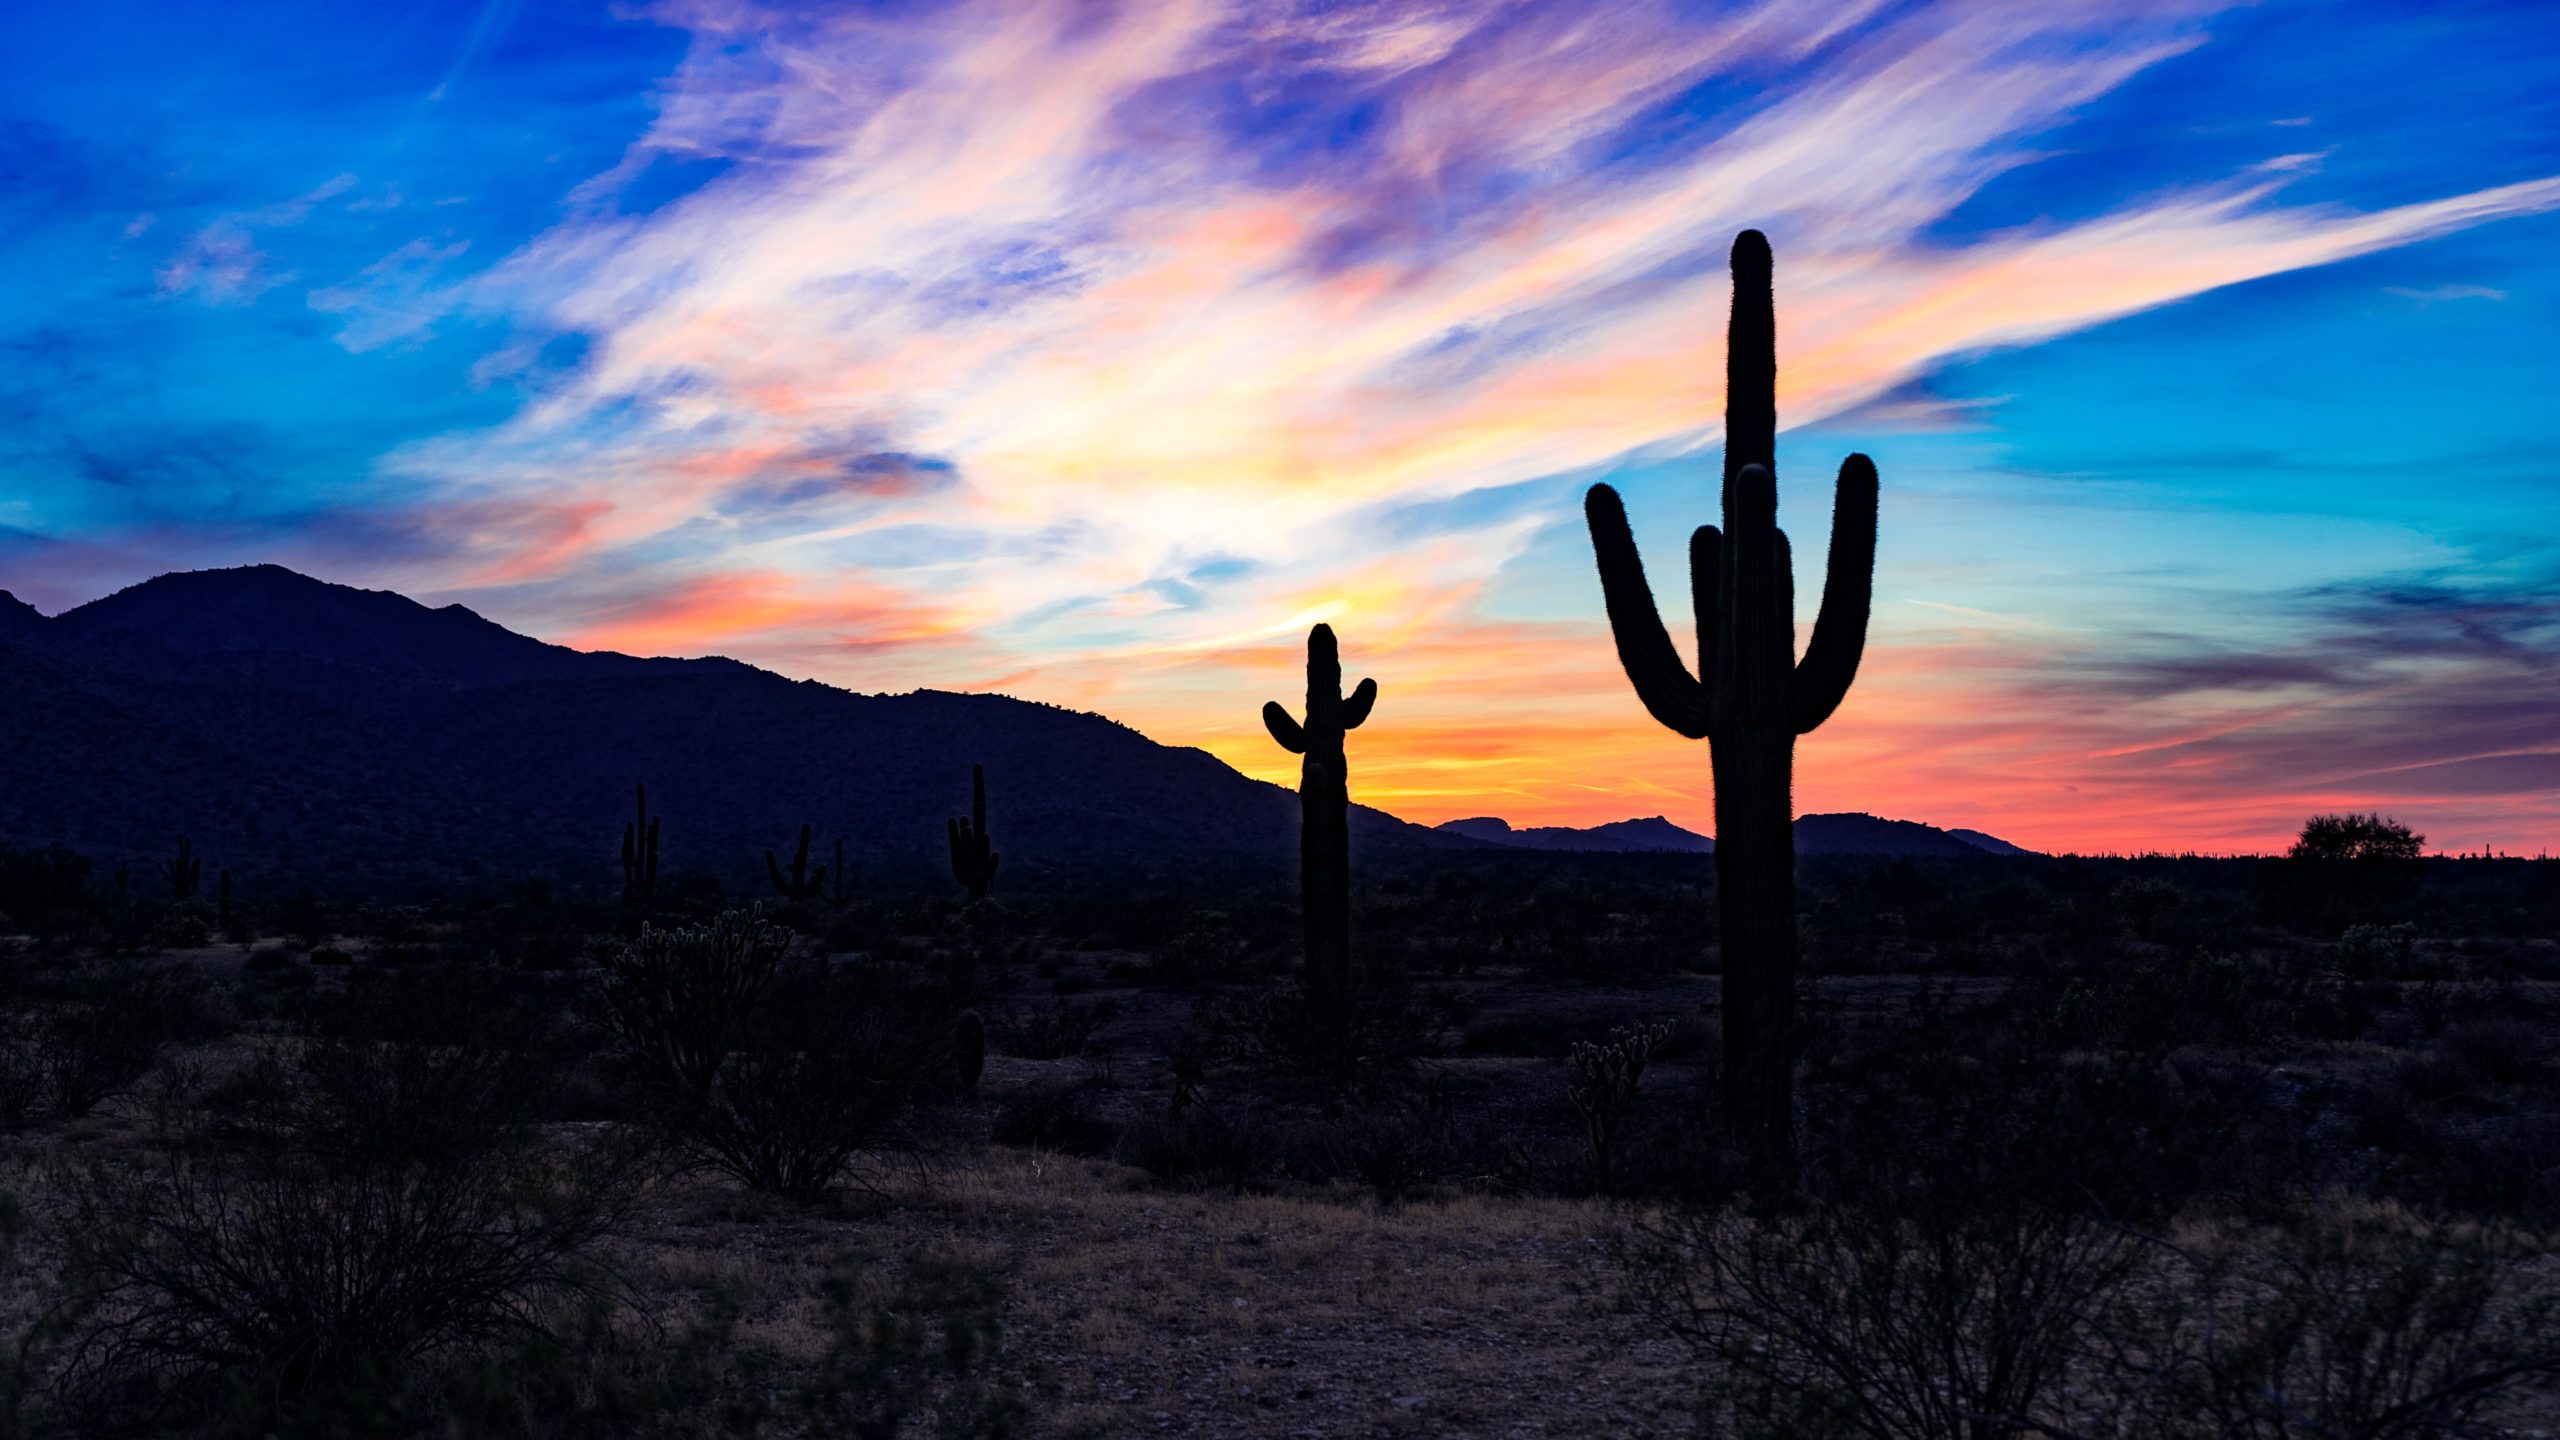 Sunset with Saguaro Cactus and Phoenix Mountains